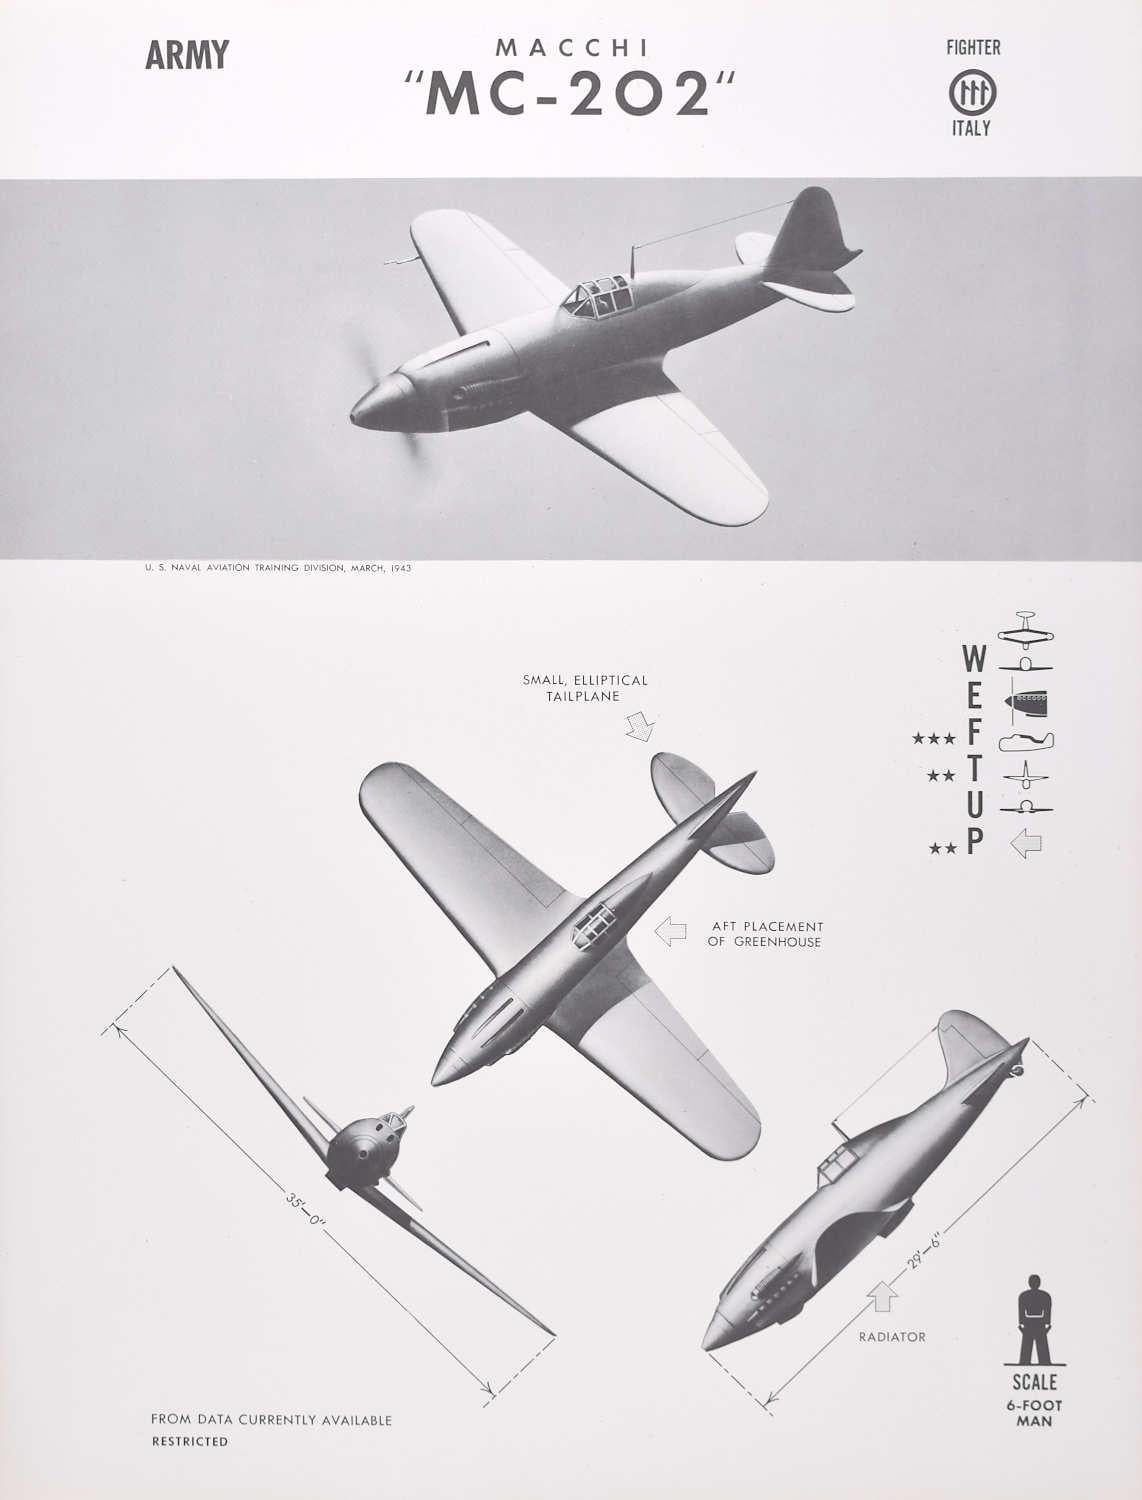 1943 Macchi "MC-202" Italian fighter plane identification poster WW2 - Print by Unknown